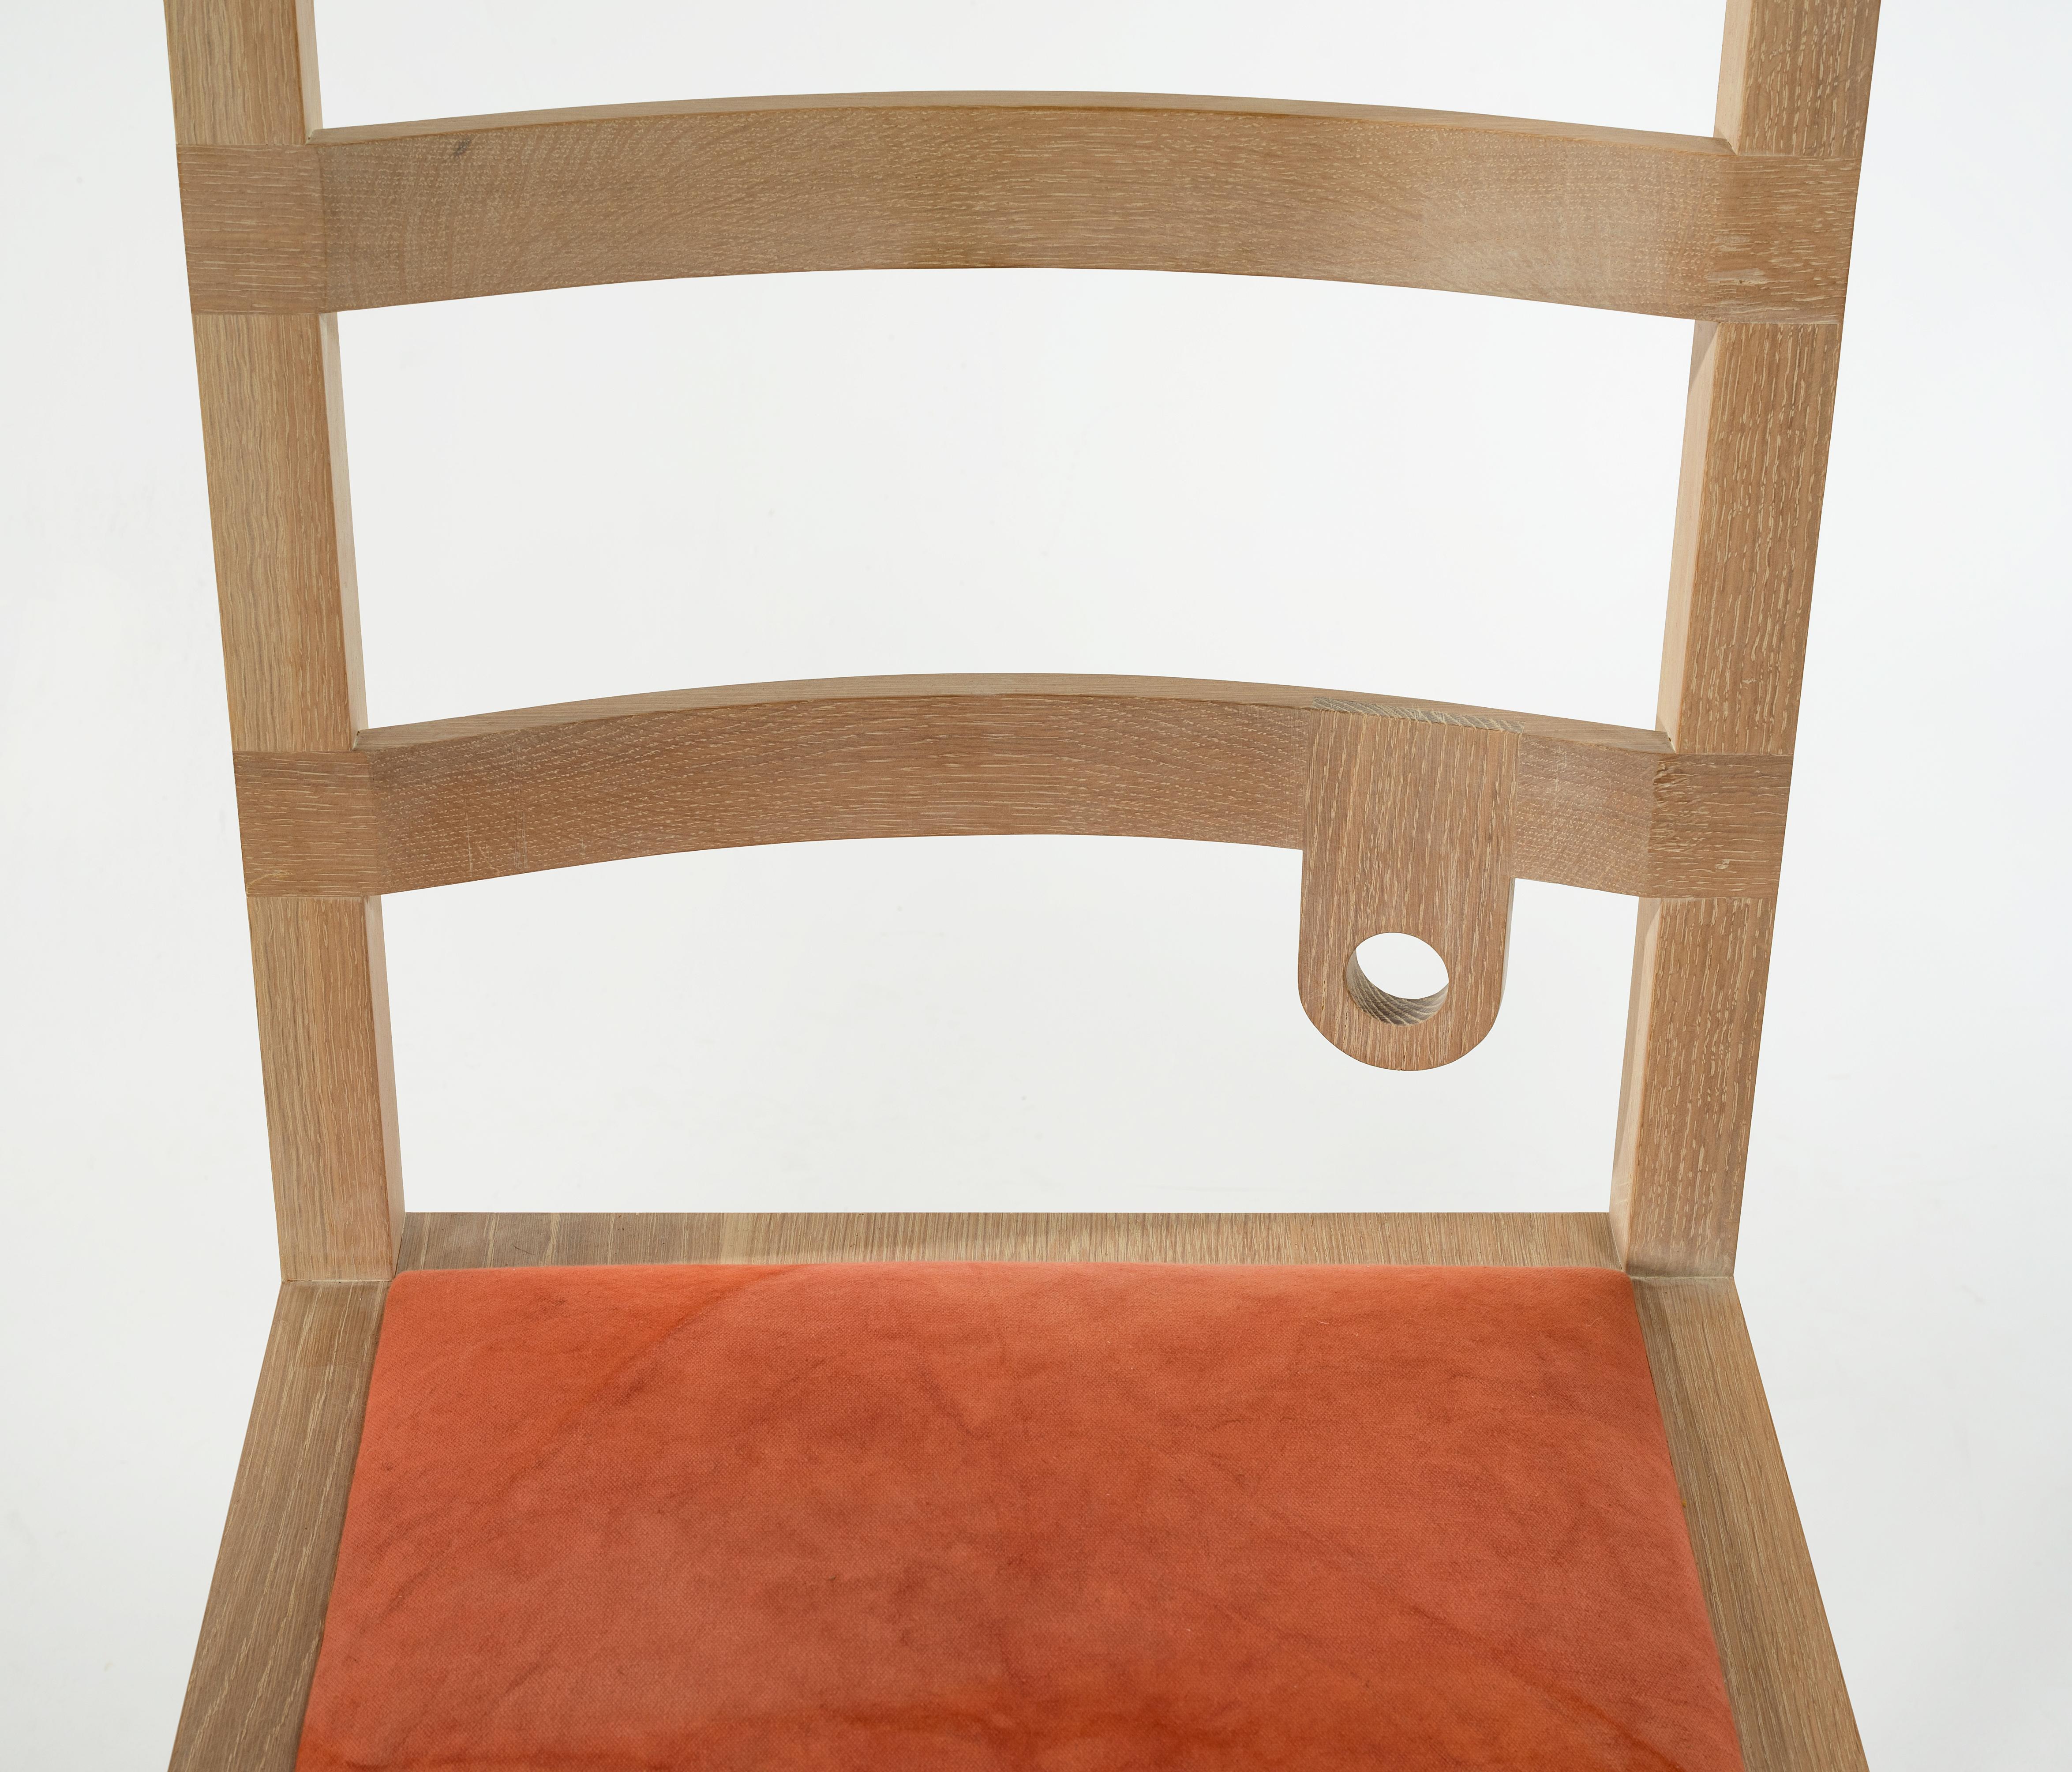 Monolith ladderback chair by Phaedo
Dimensions: W 18